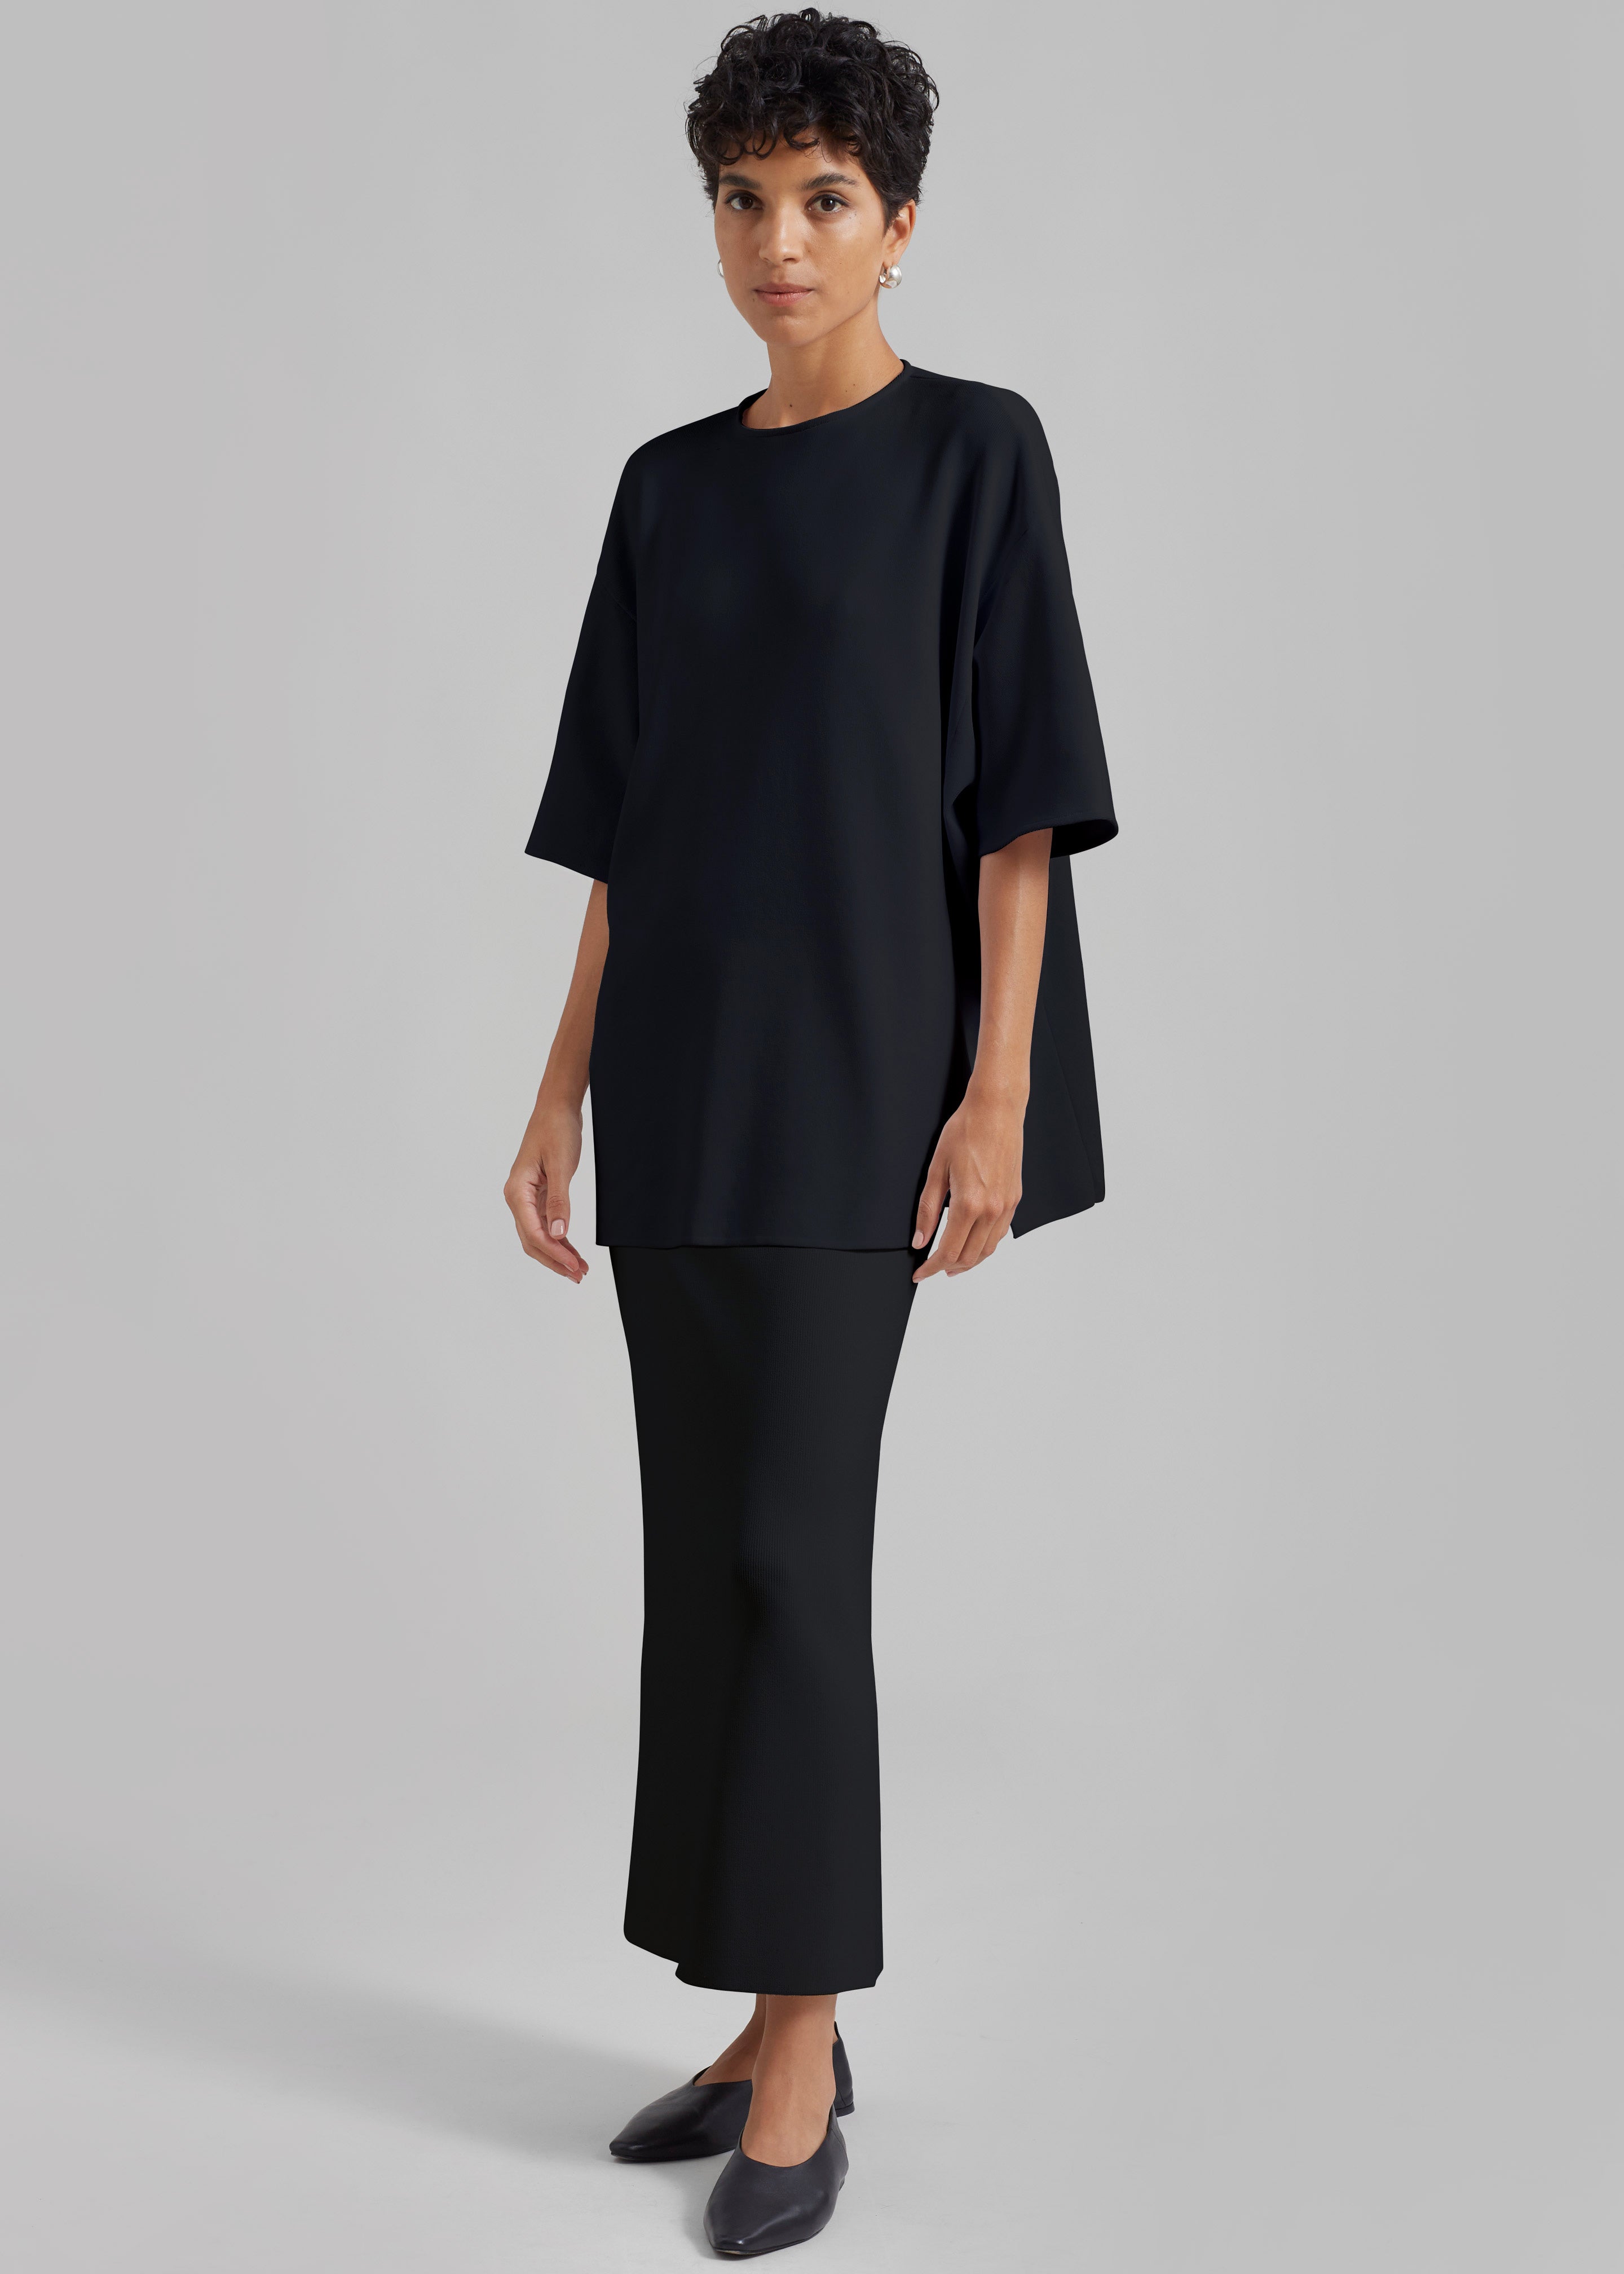 Solange Knit Pencil Skirt - Black - 6